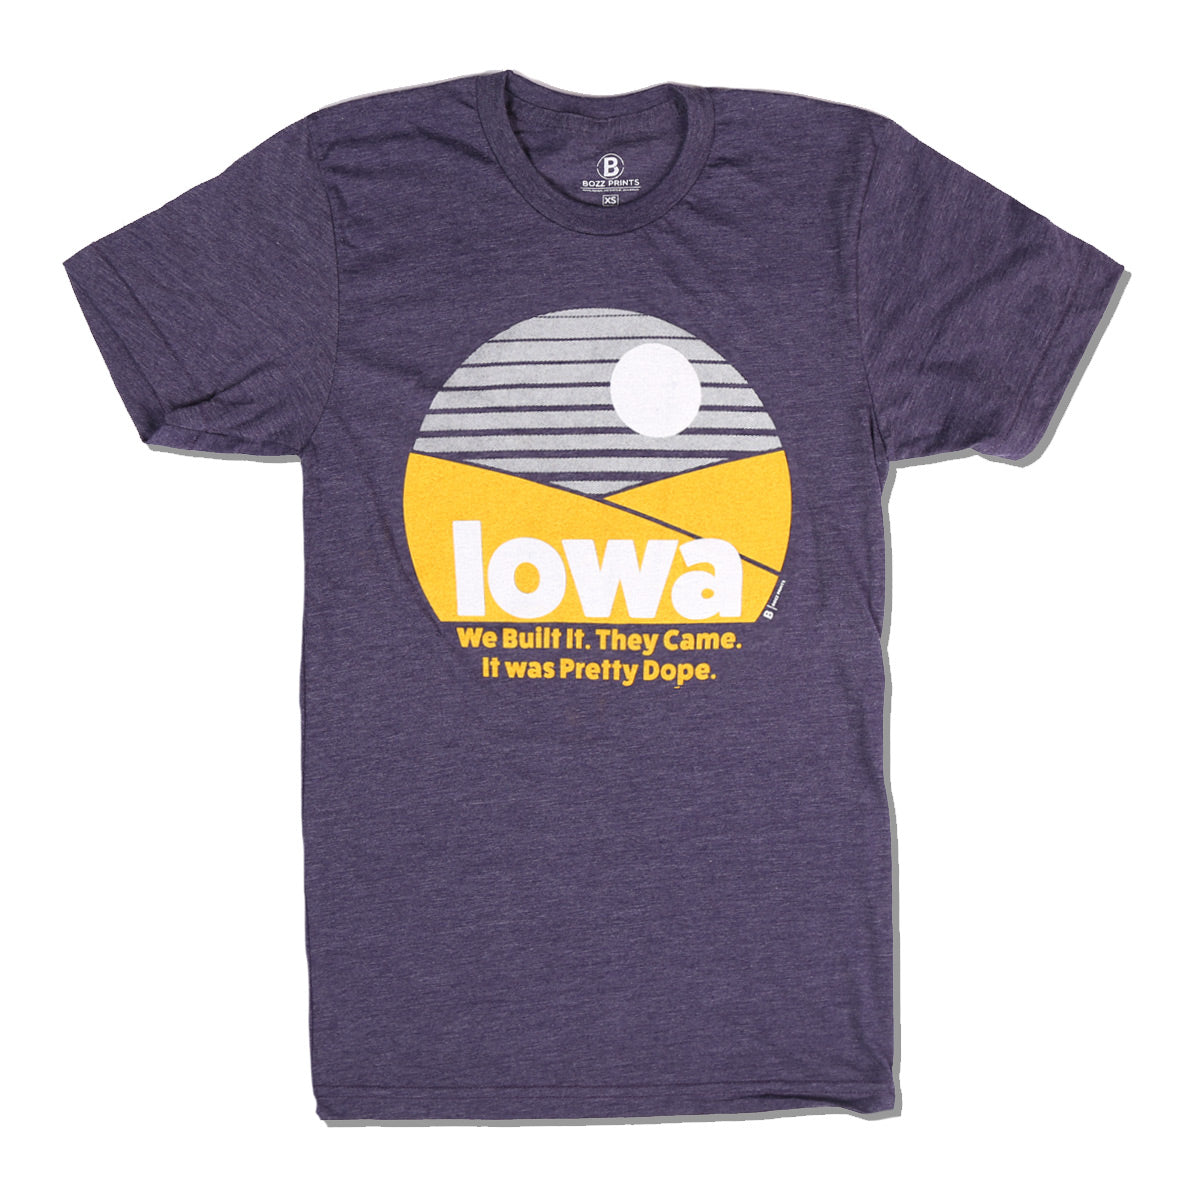 Iowa Pretty Dope T-Shirt - Bozz Prints